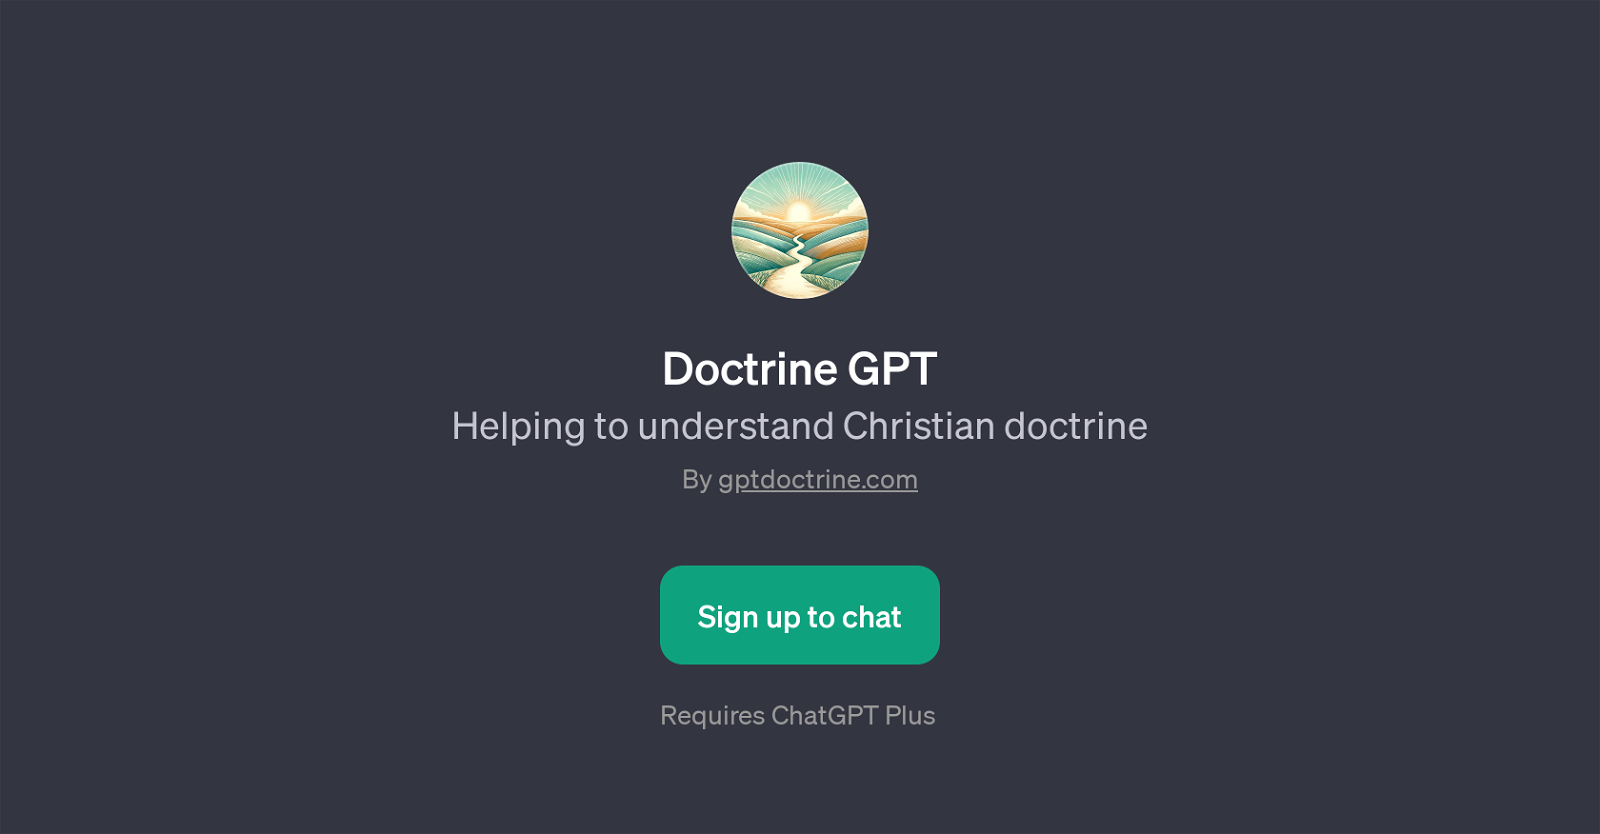 Doctrine GPT website